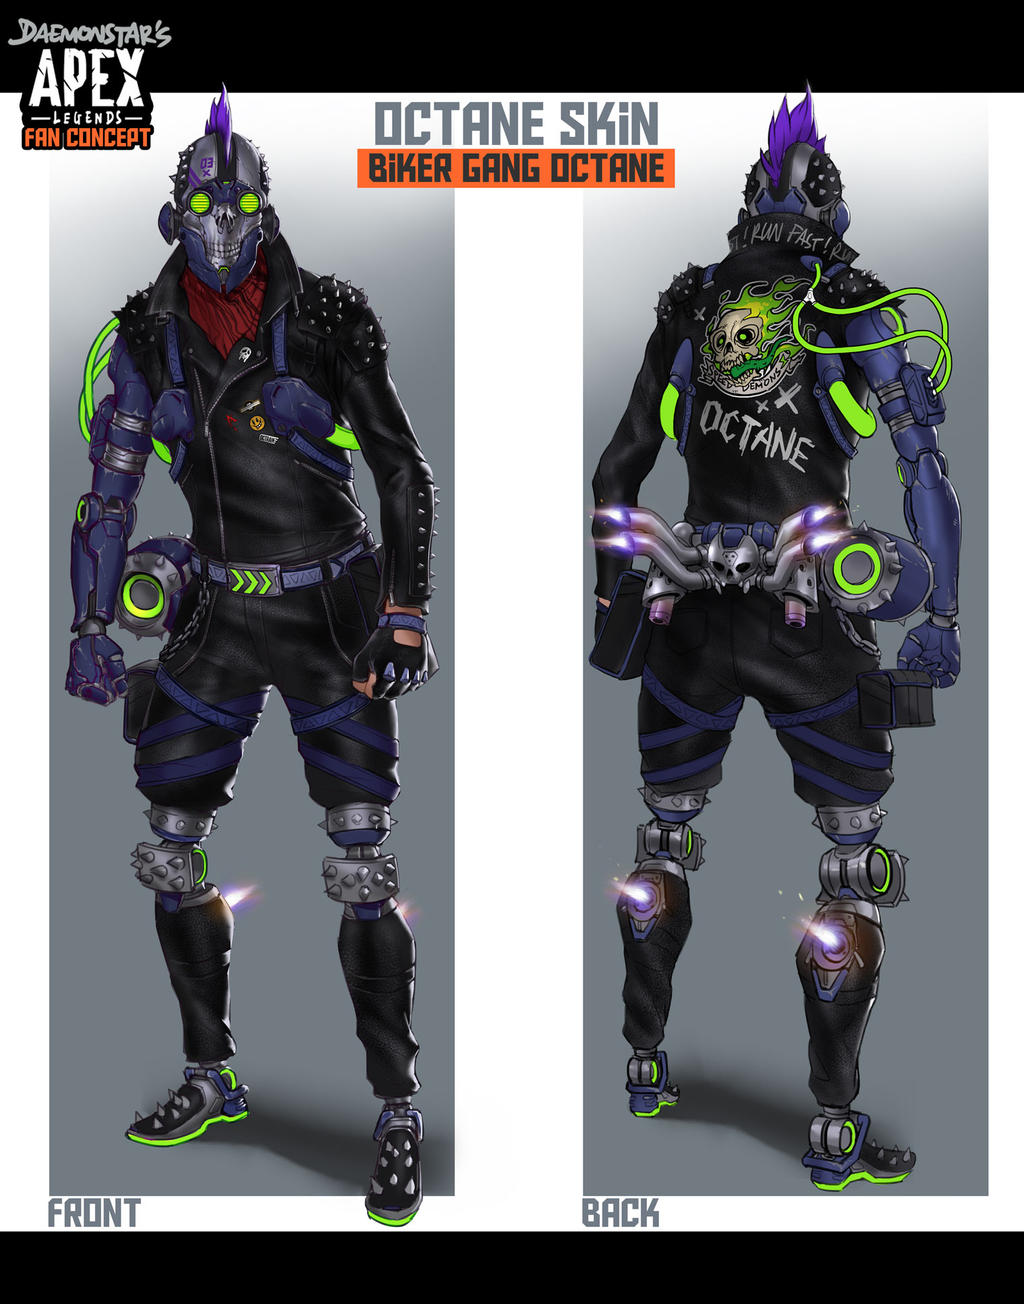 Apex Legends Fan Concept Biker Gang Octane Skin By Daemonstar On Deviantart